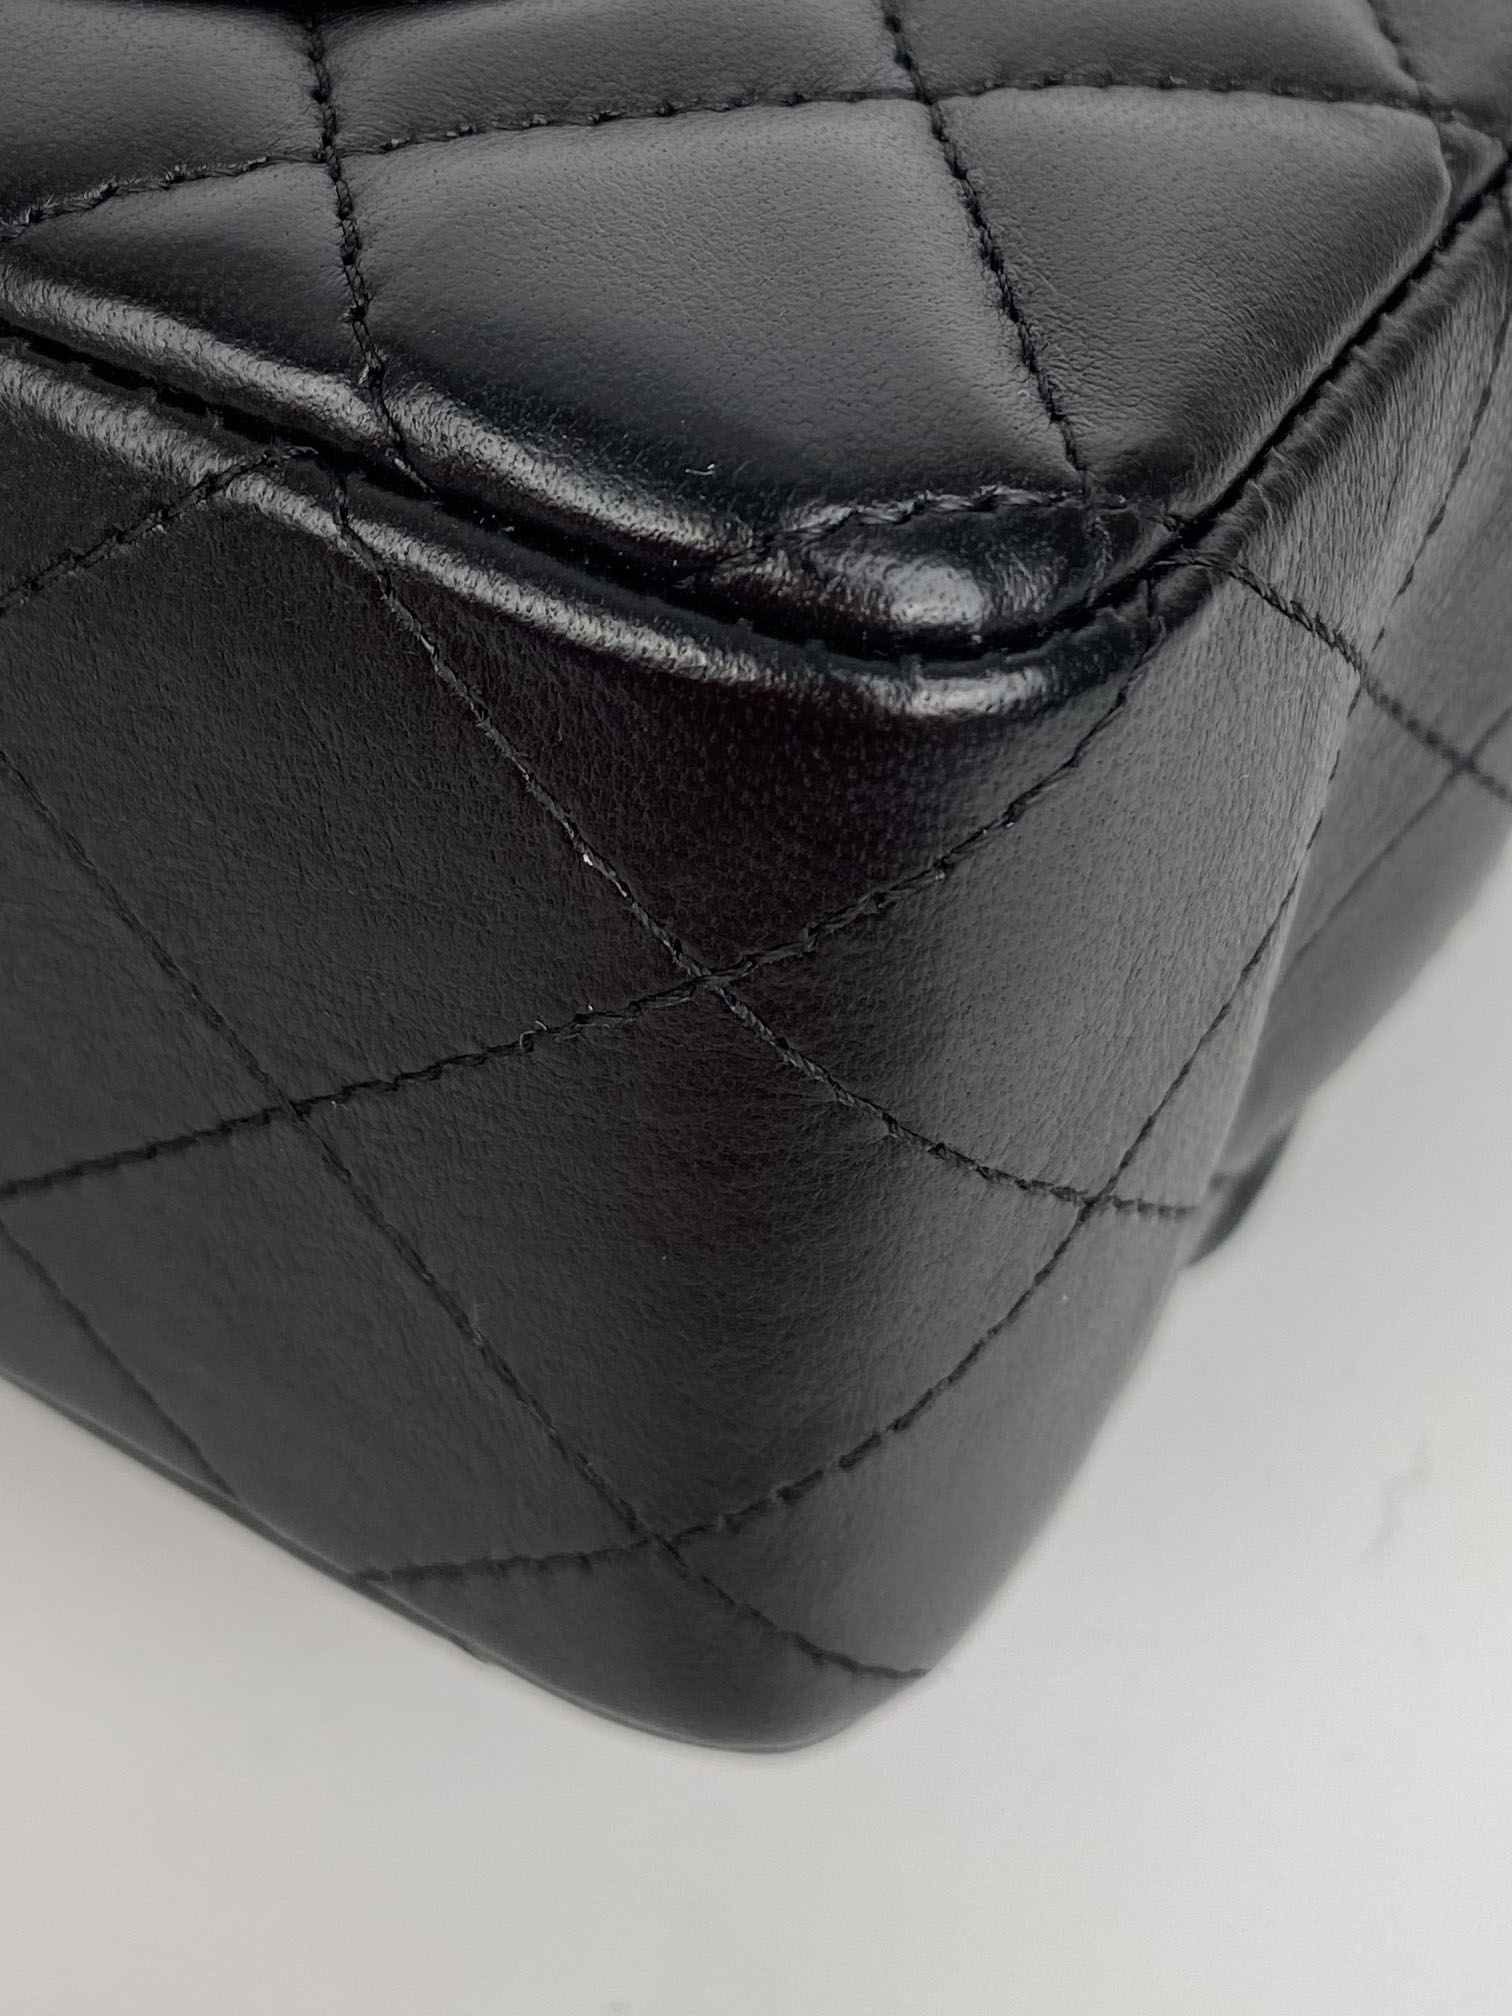 Chanel Black Mini Classic Flap Bag